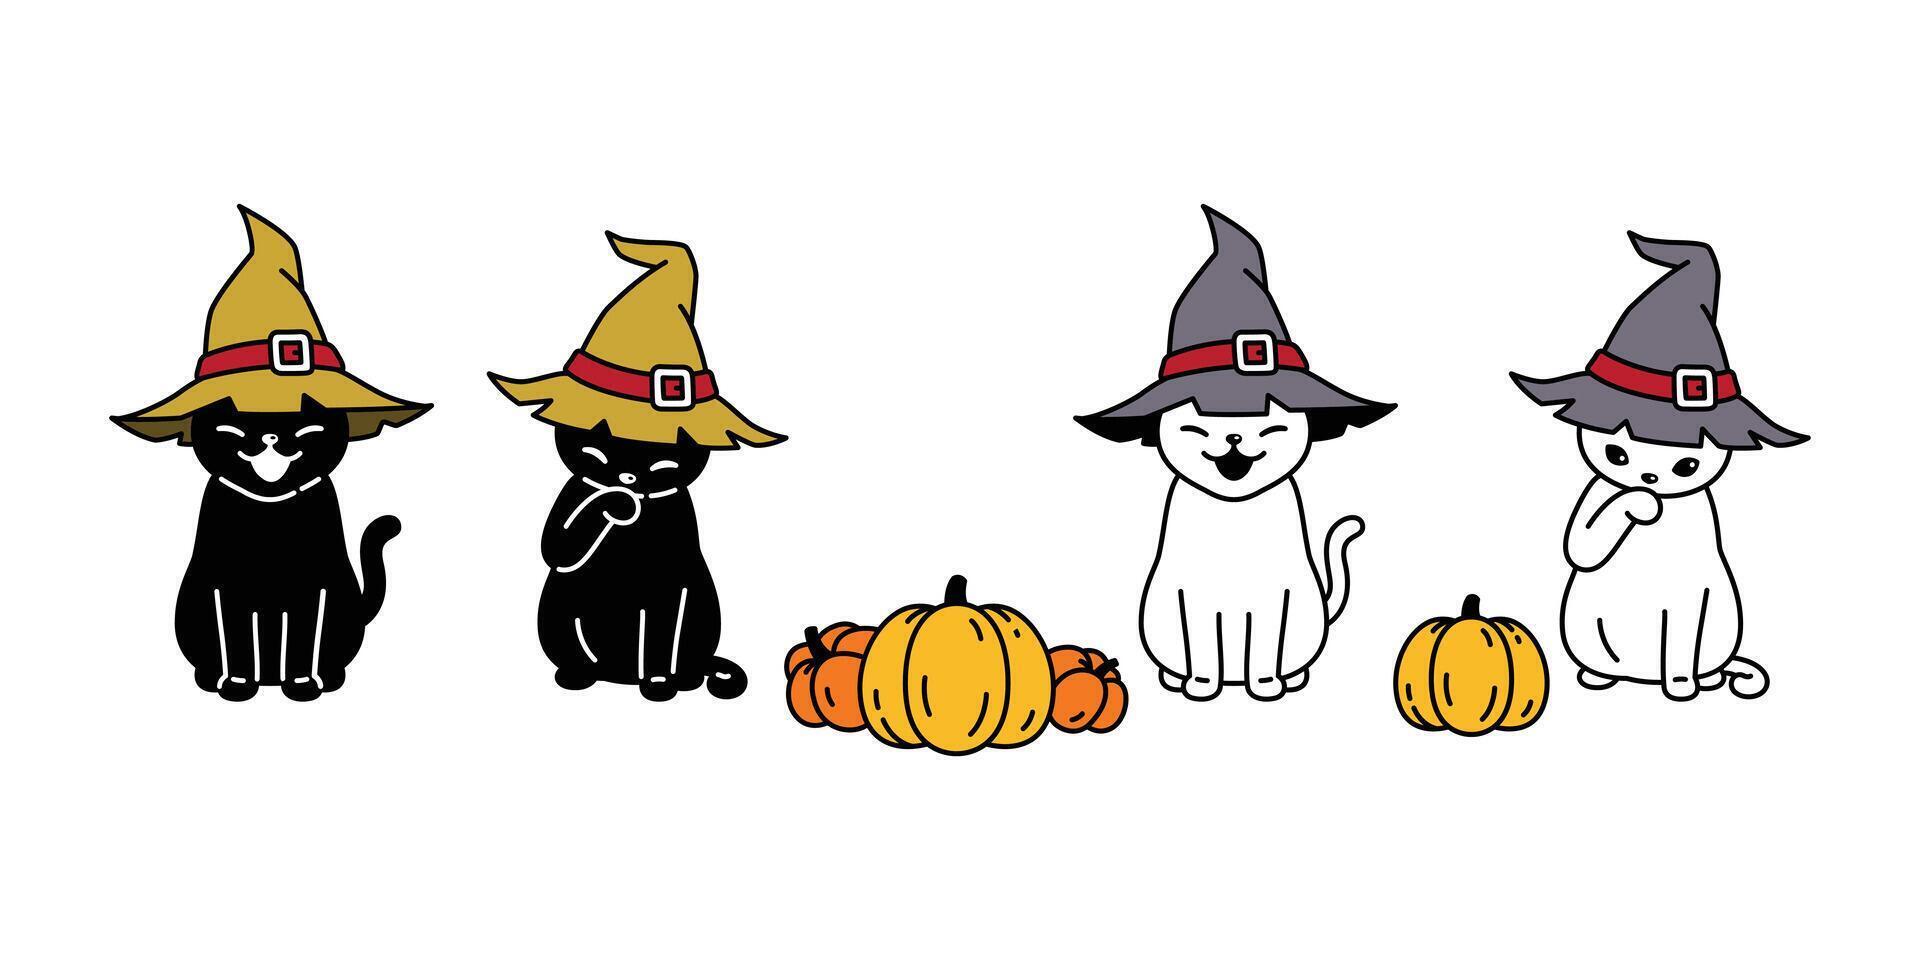 cat vector Halloween pumpkin kitten black witch hat calico icon logo symbol ghost character cartoon doodle illustration design